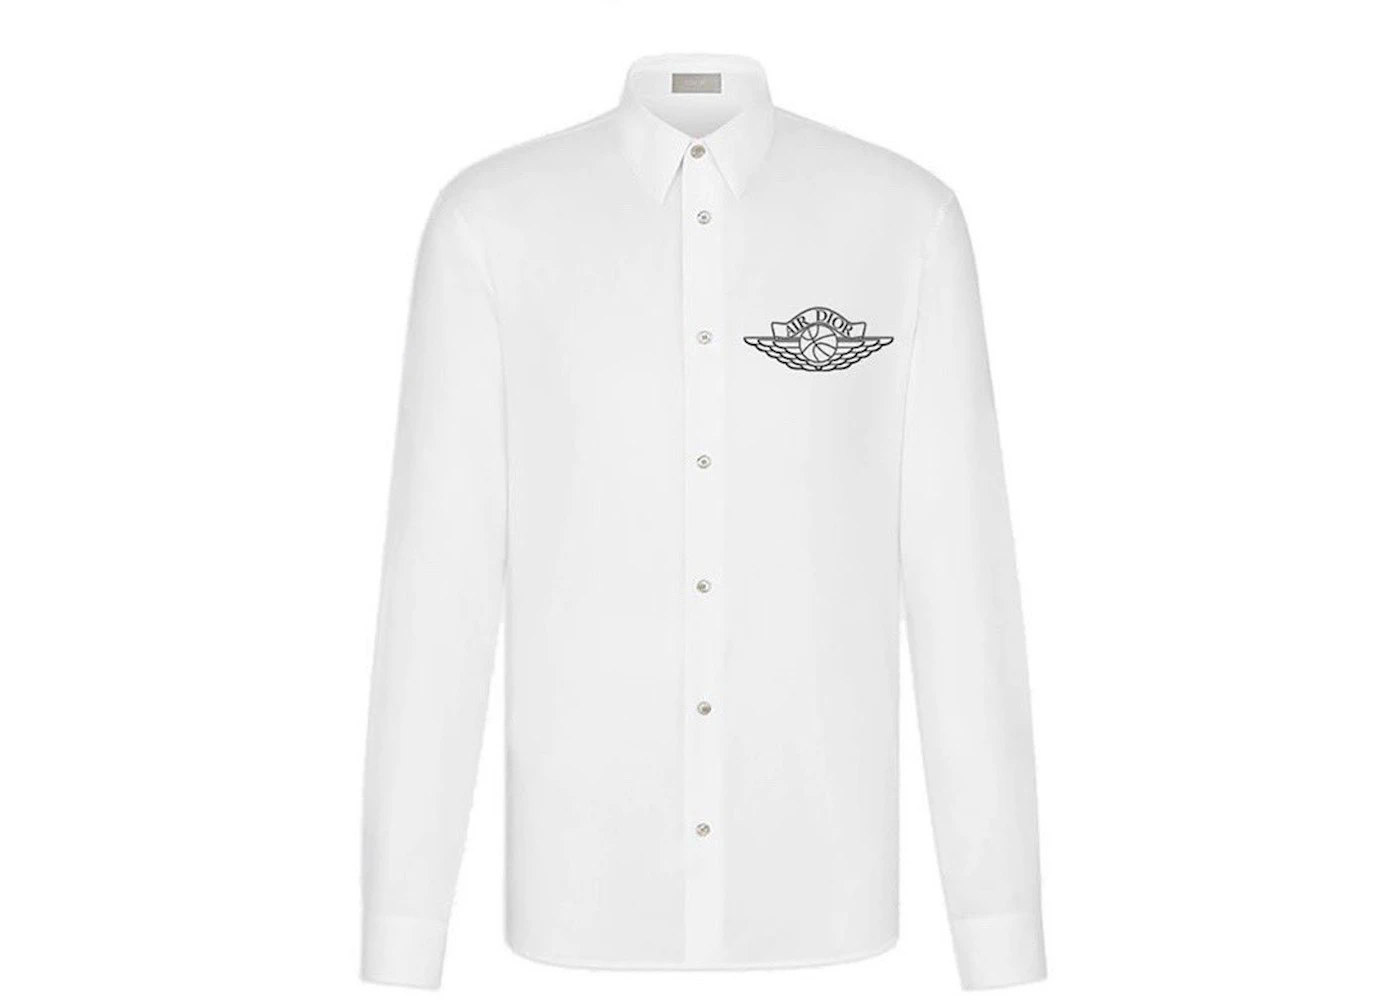 Dior x Jordan Wings Longsleeve Button Up Shirt White Men's - SS20 - US